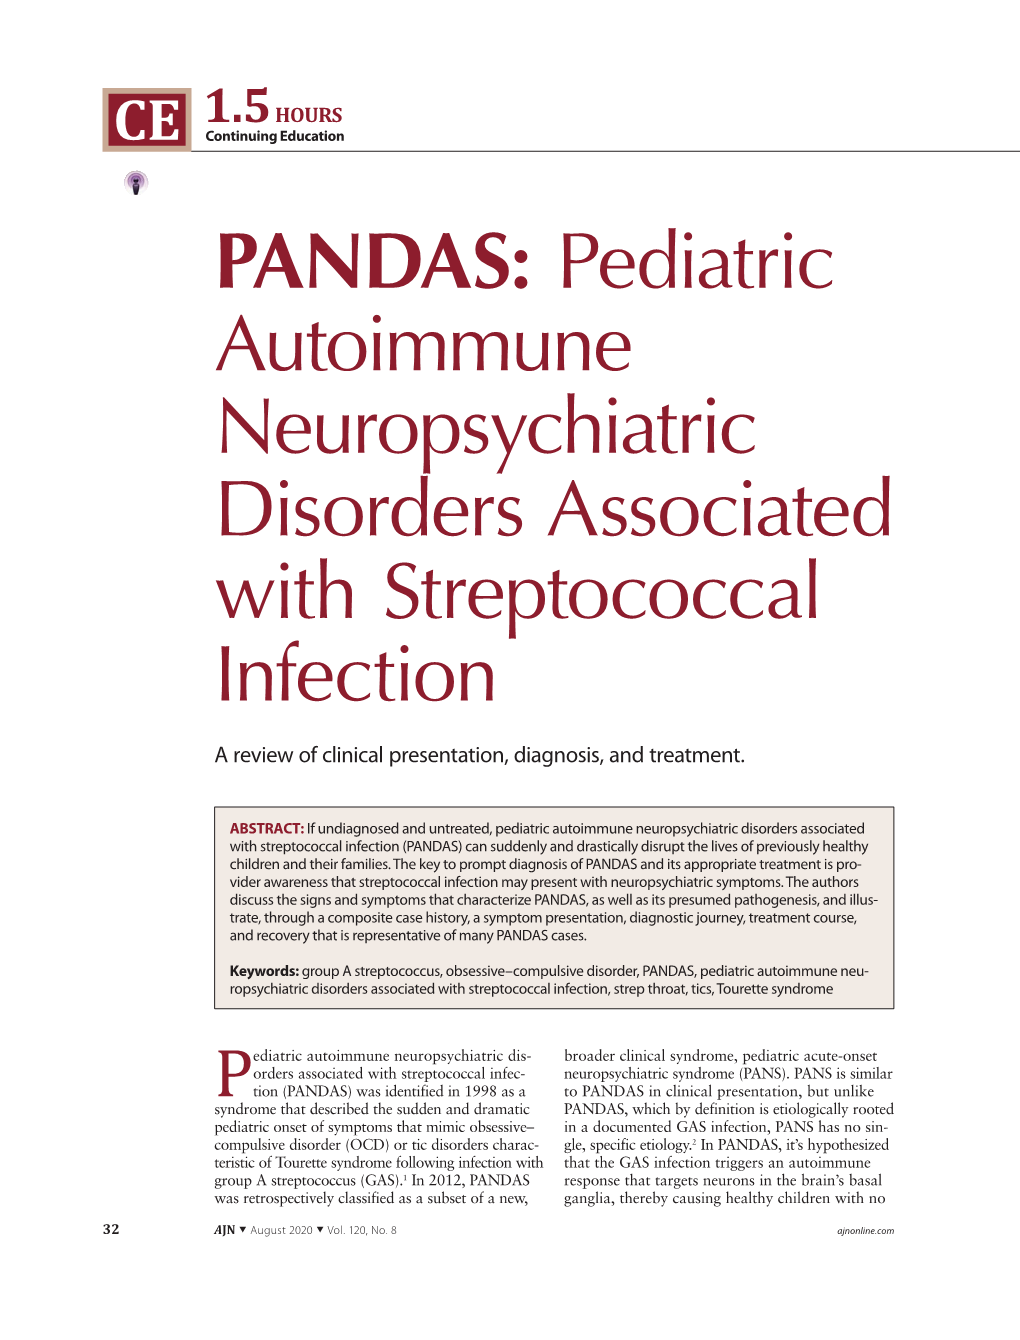 PANDAS: Pediatric Autoimmune Neuropsychiatric Disorders Associated with Streptococcal Infection